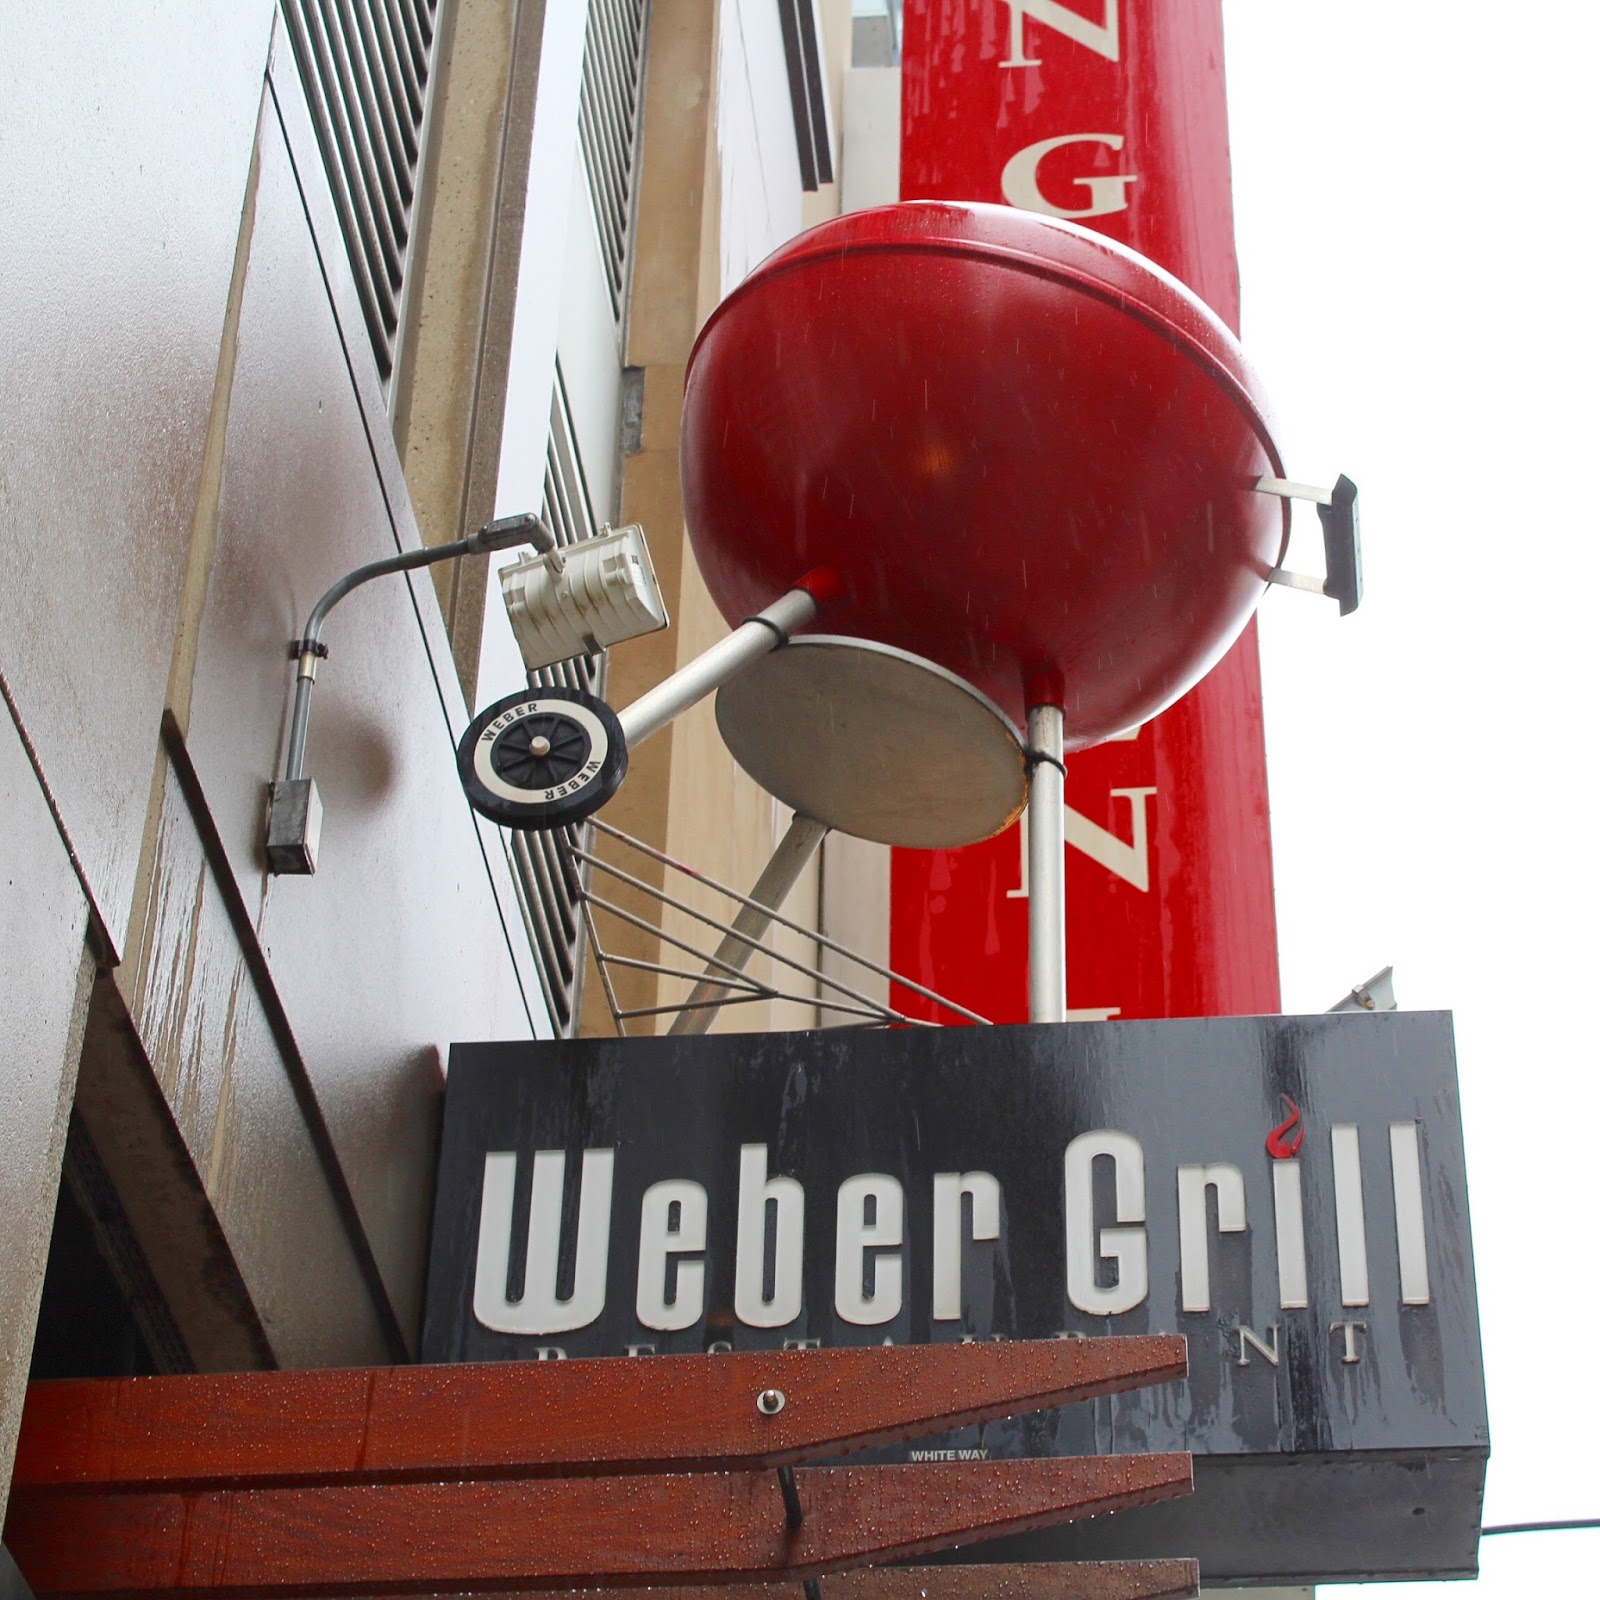 Chicago  Weber Grill Restaurant